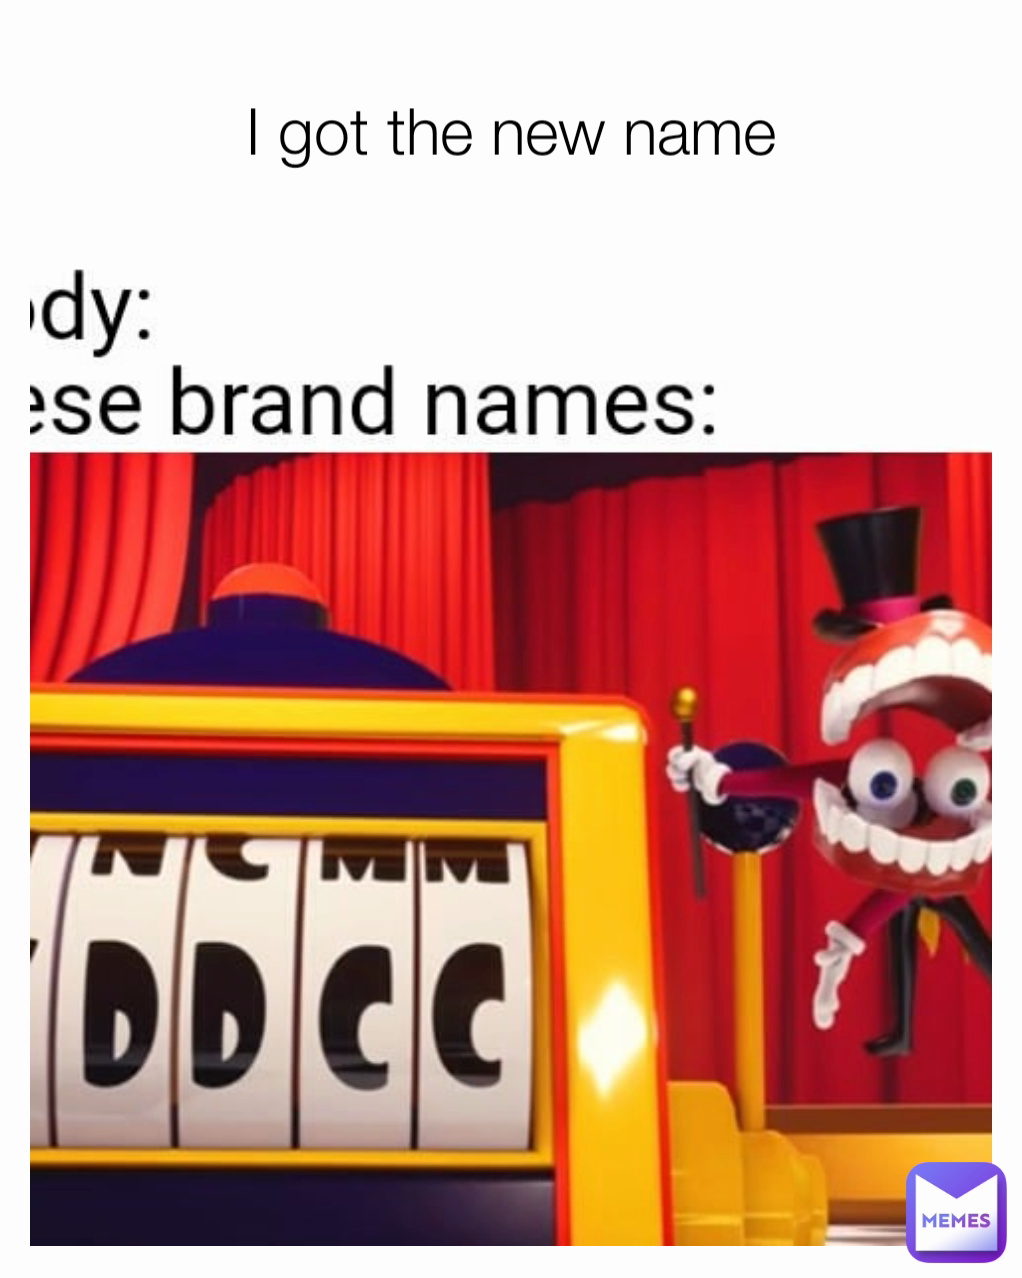 I got the new name